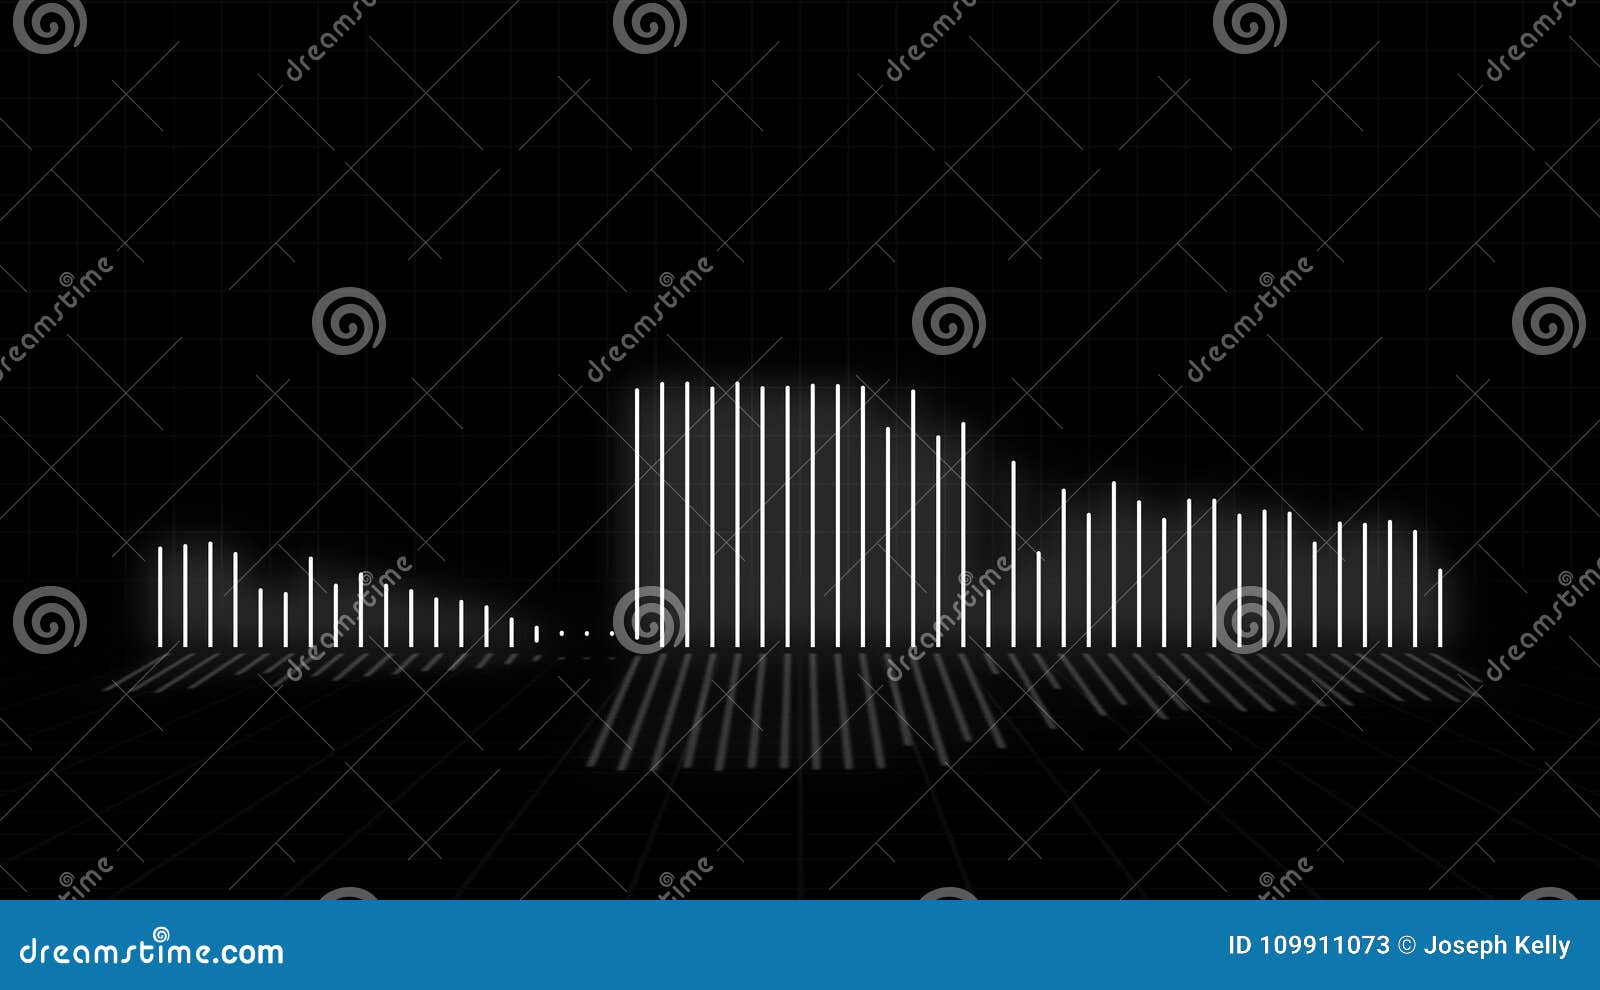 Techno Futuristic Retro Audio Meter Bar Background Playing